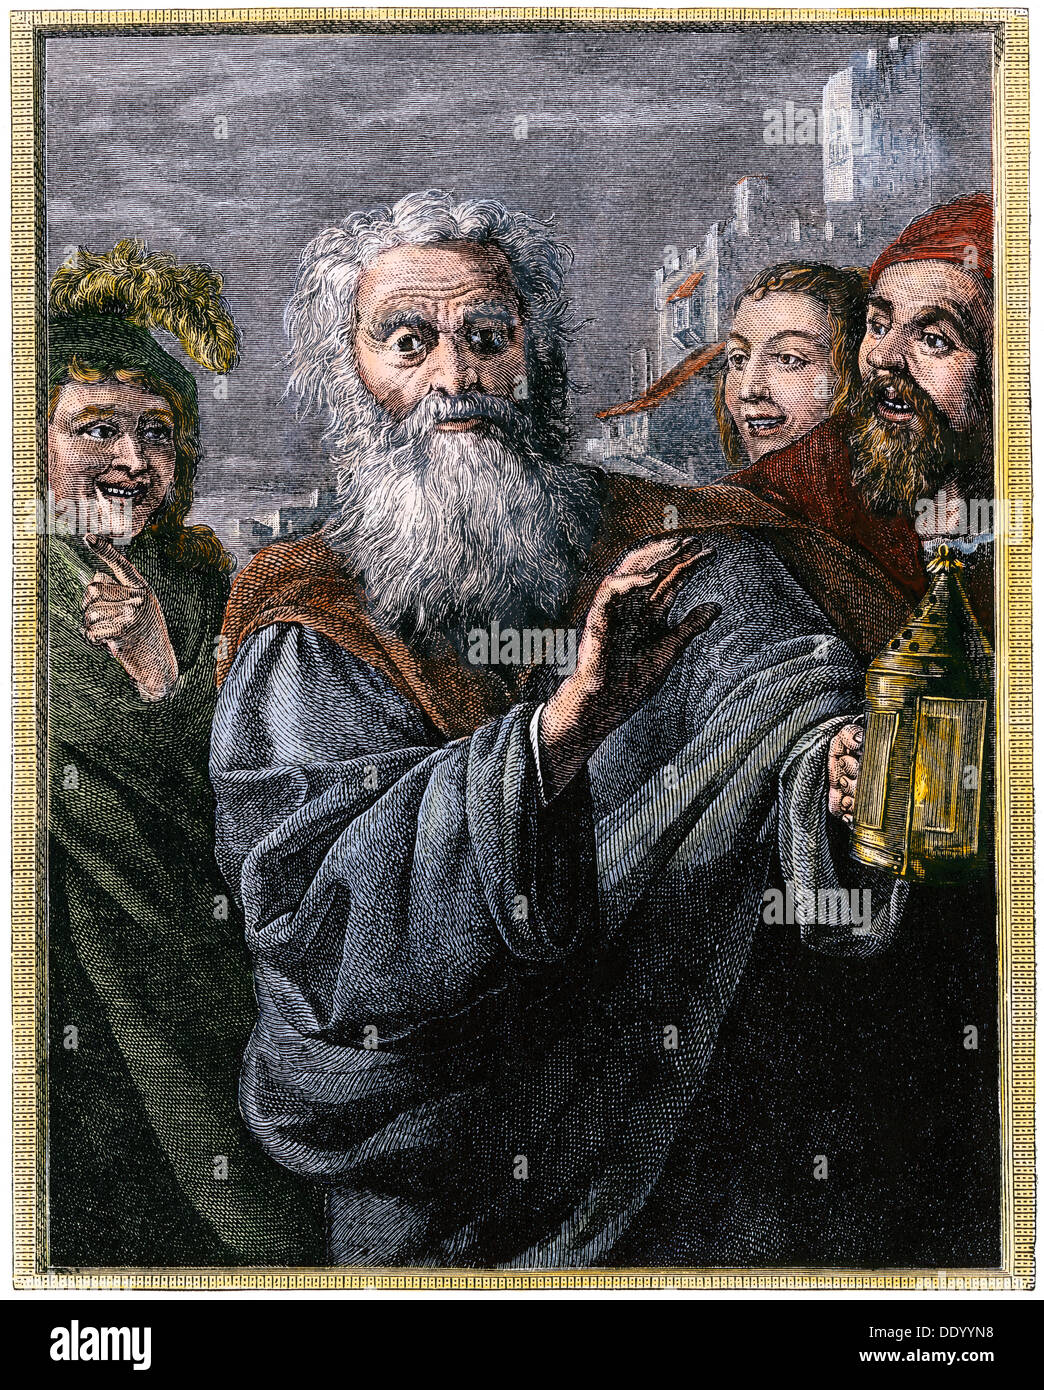 Diogenes lamp -Fotos und -Bildmaterial in hoher Auflösung – Alamy